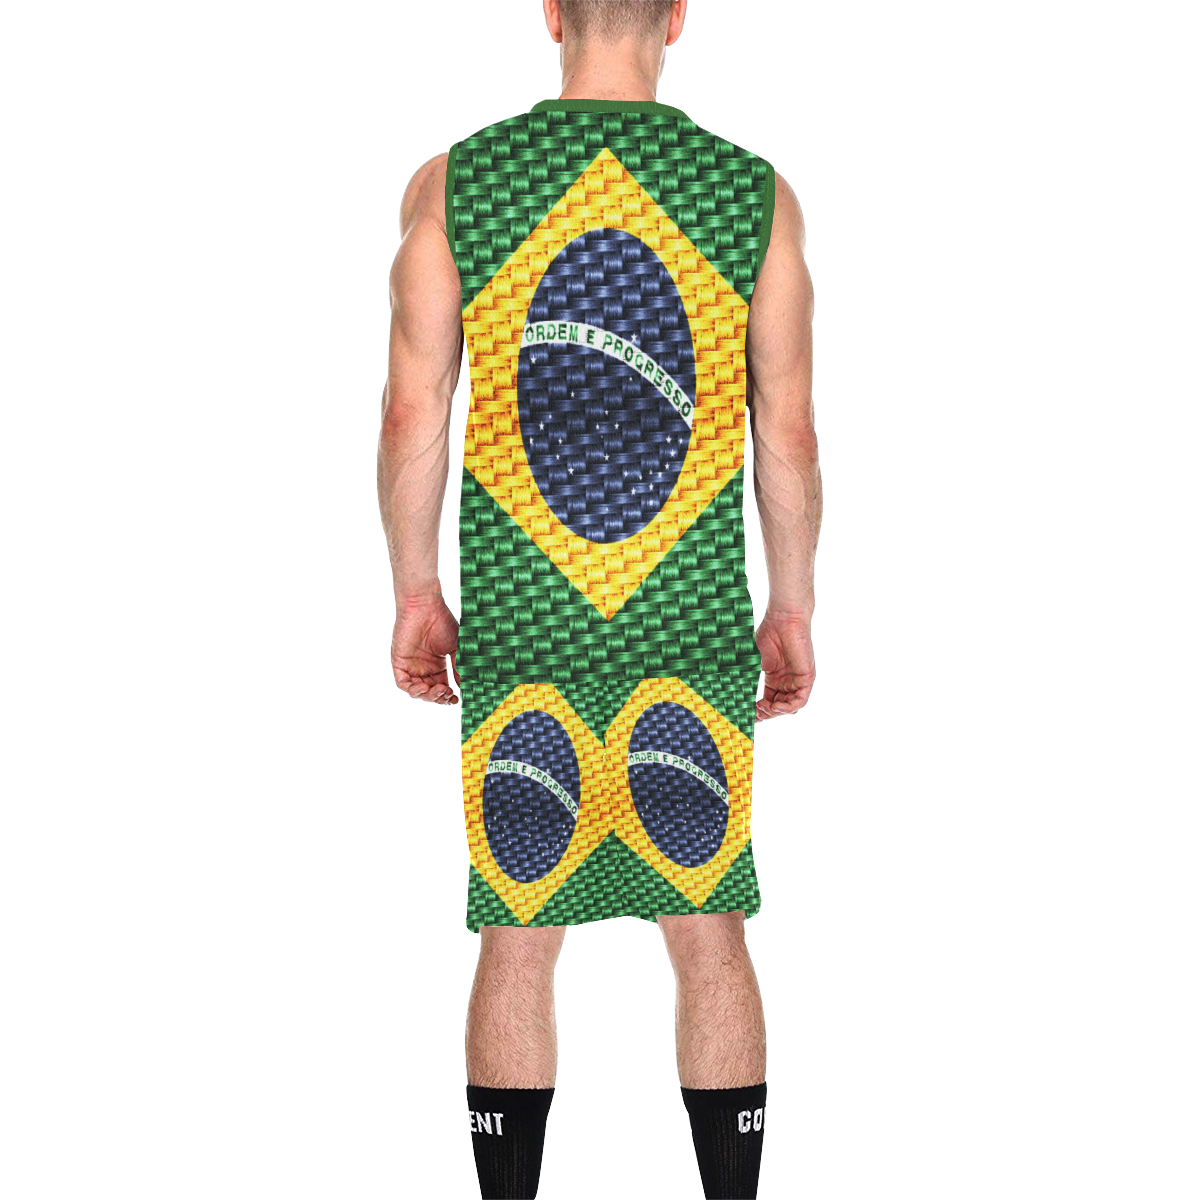 DELUXE TRESSER LOGO All Over Print Basketball Uniform